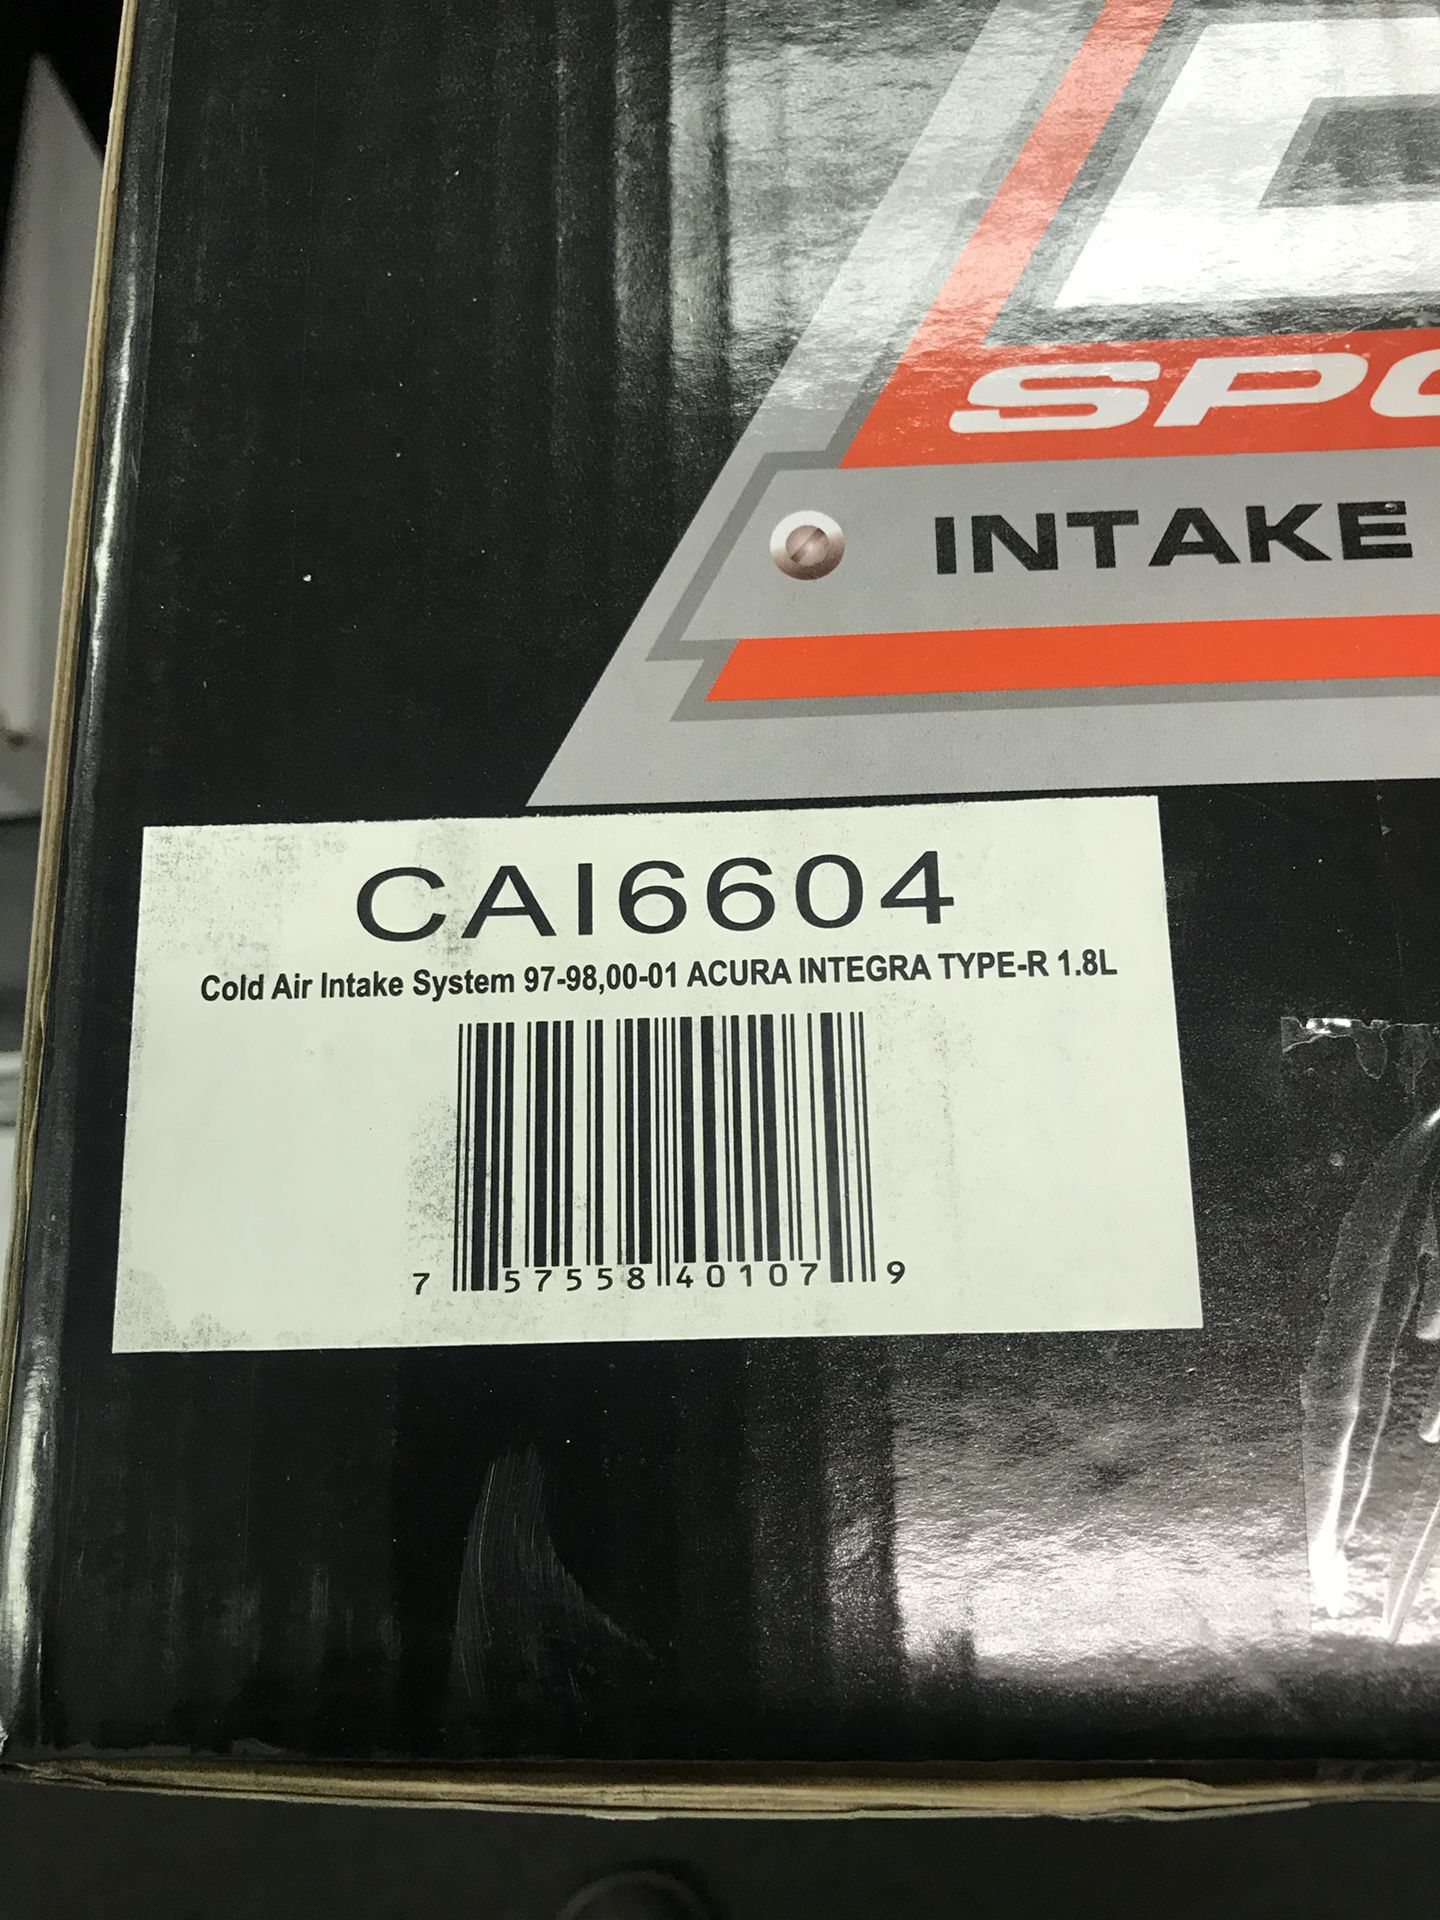 Brand New in Box DC Sports DC2 ITR Intake CAI6604